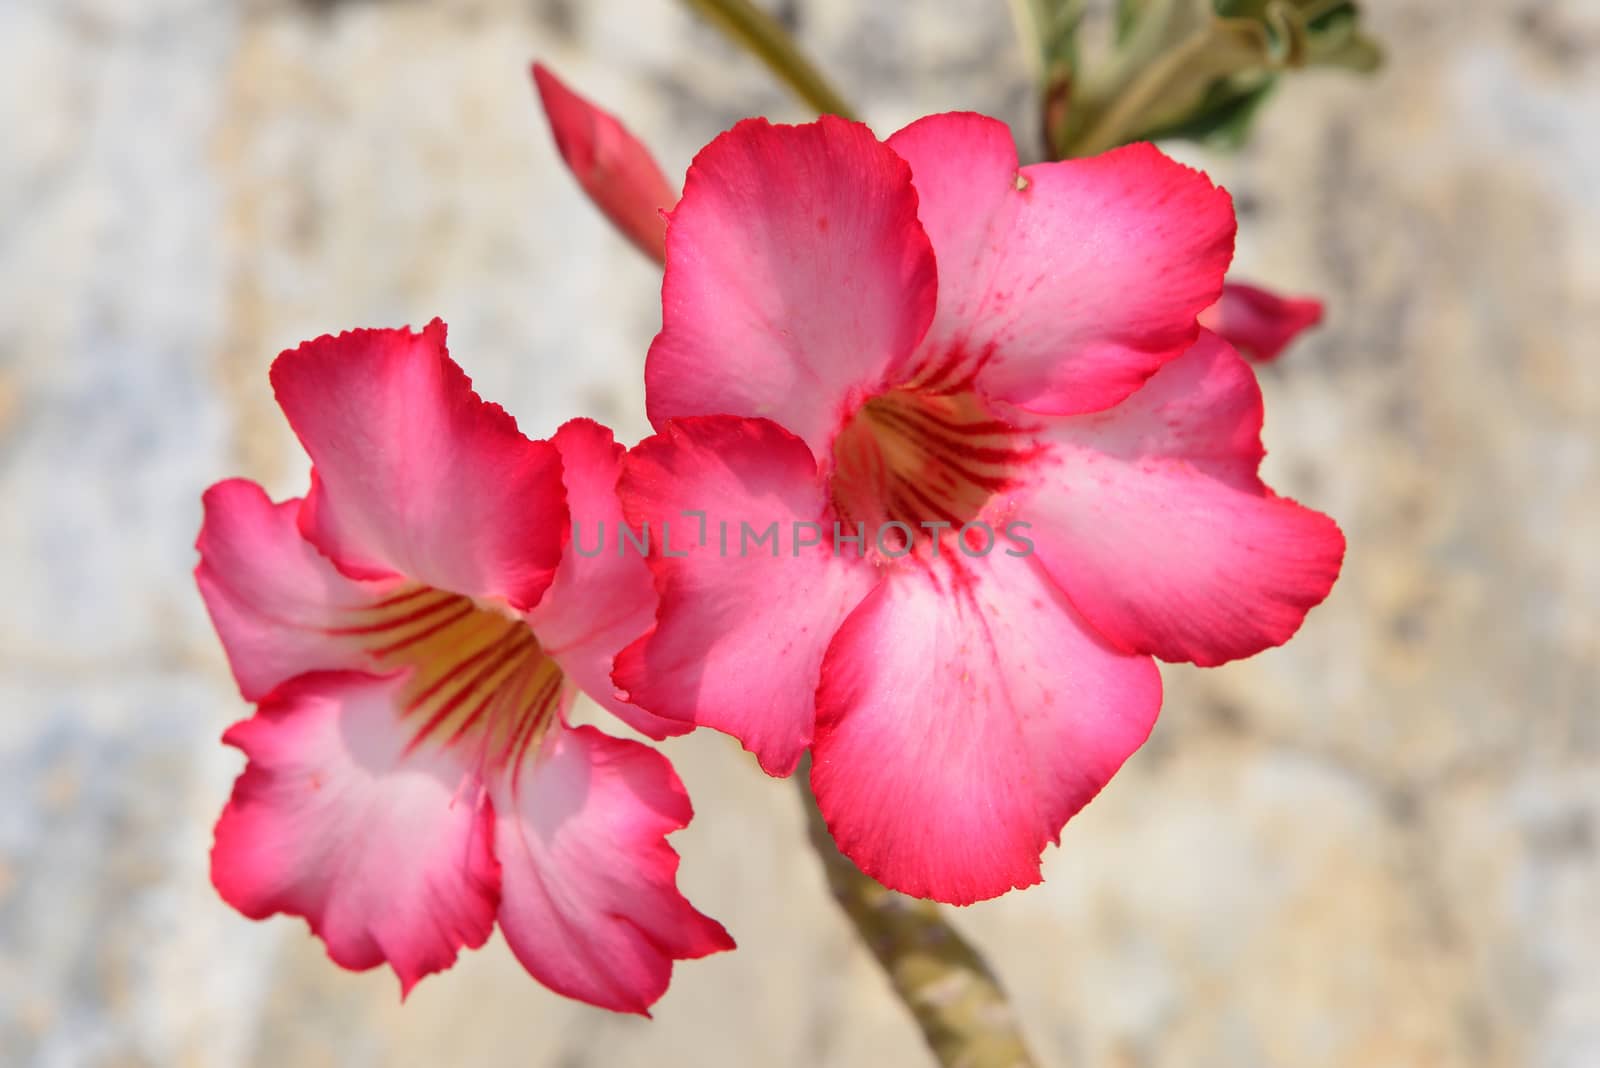 Red Desert Flower, adenium obesum